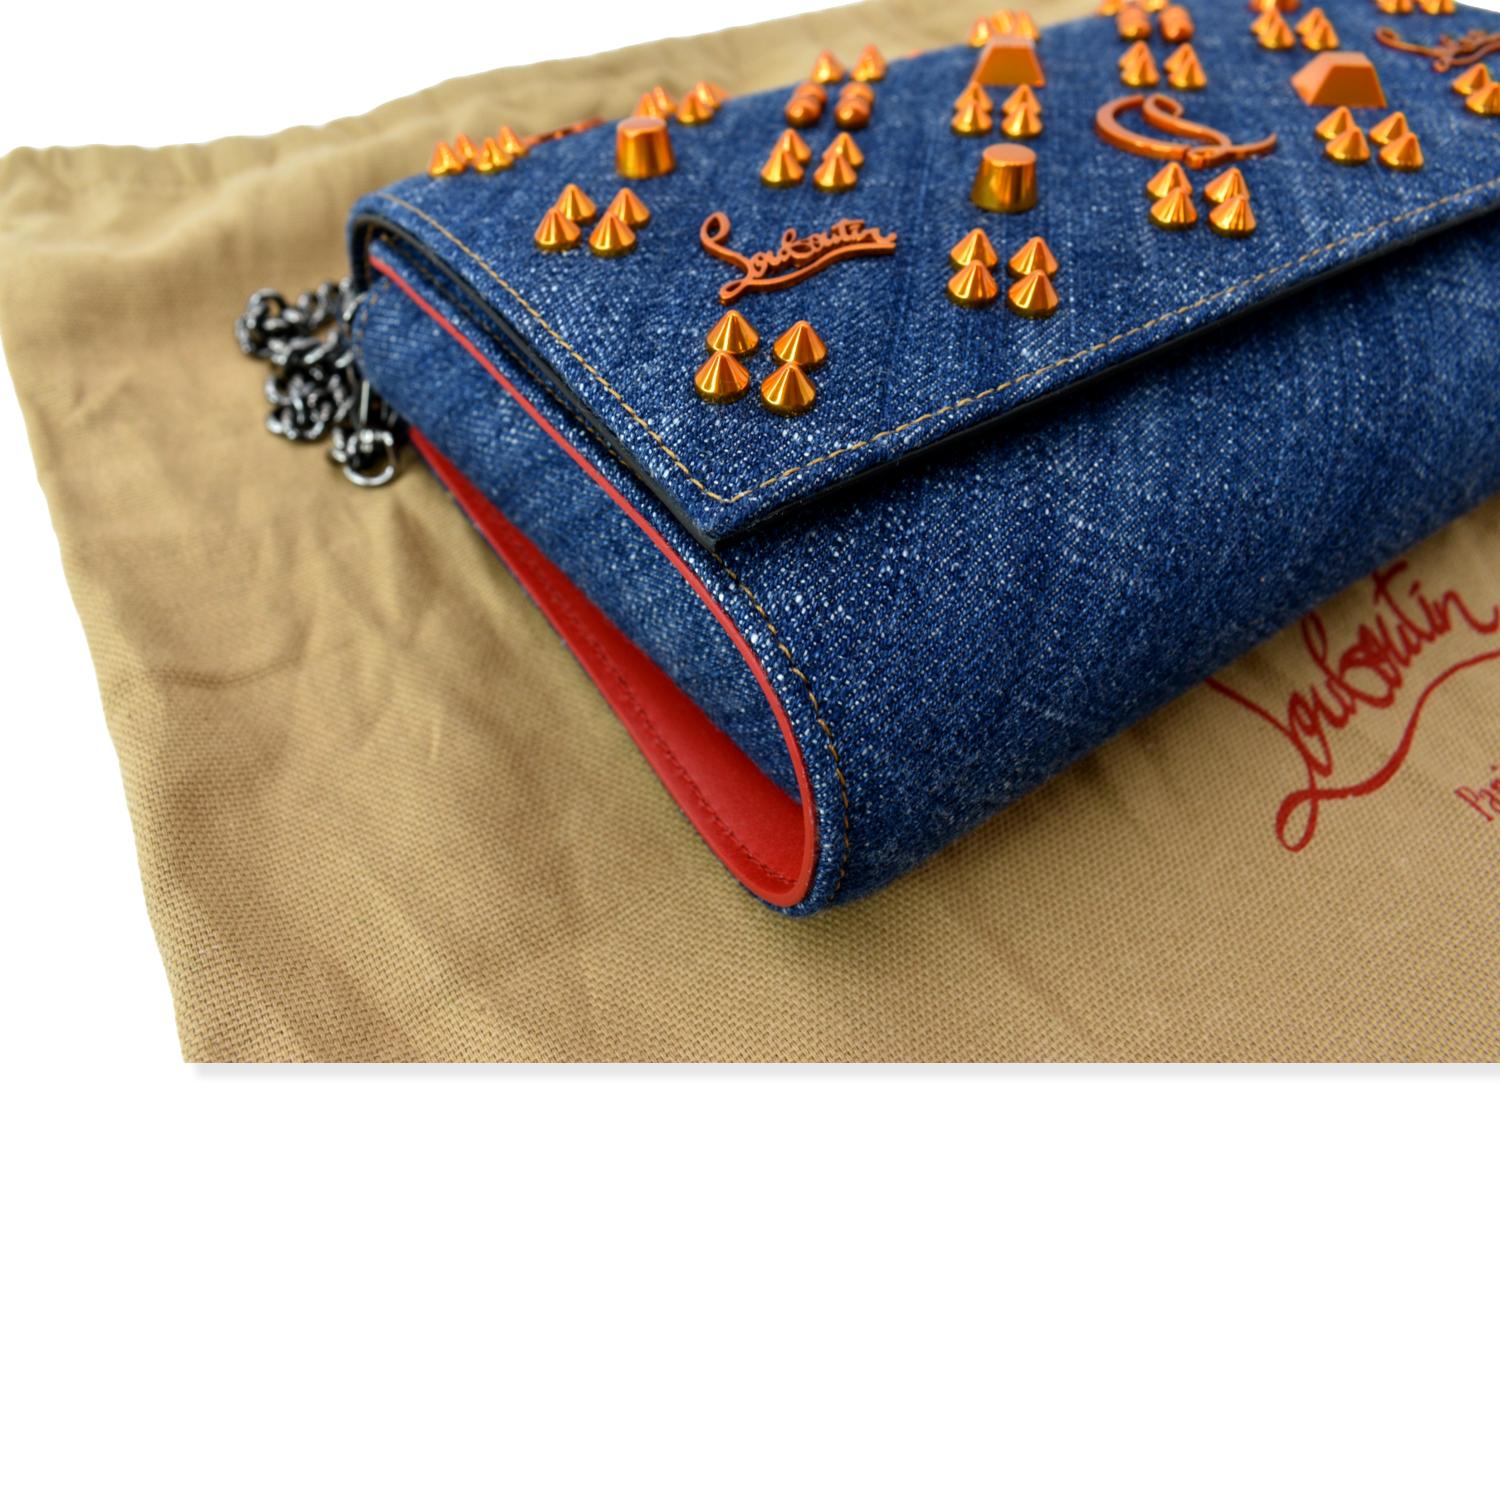 CHRISTIAN LOUBOUTIN Paloma Leather Patent Pearl Spikes Crossbody Bag B